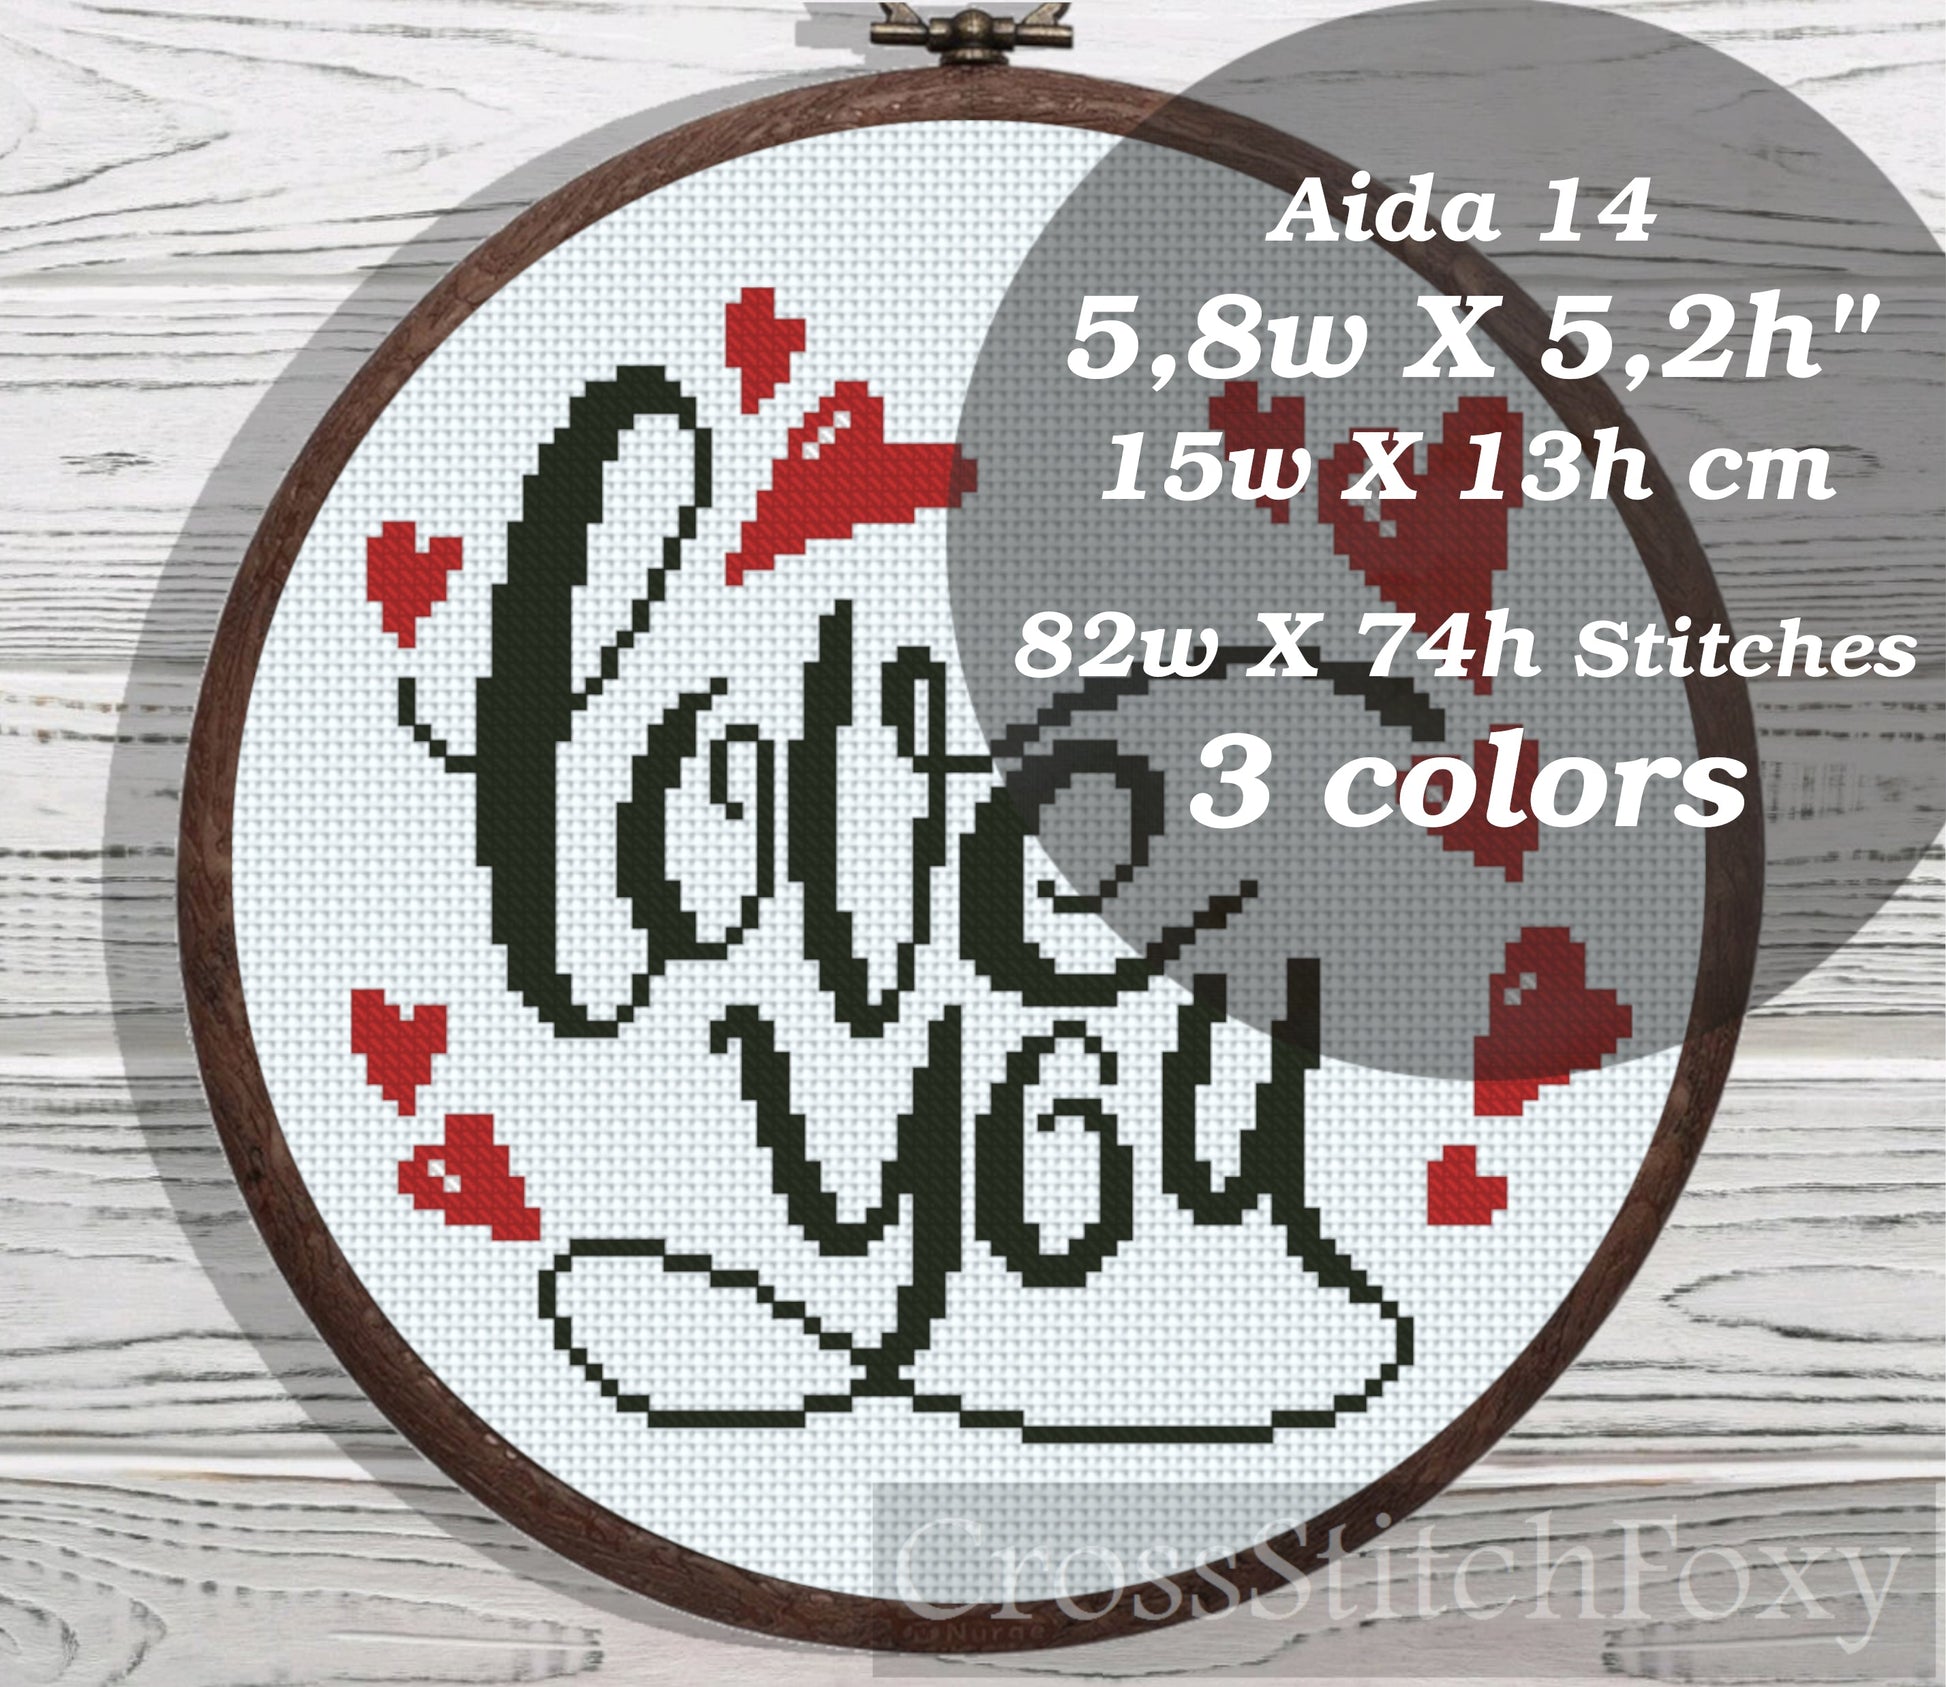 Love You Hearts cross stitch pattern